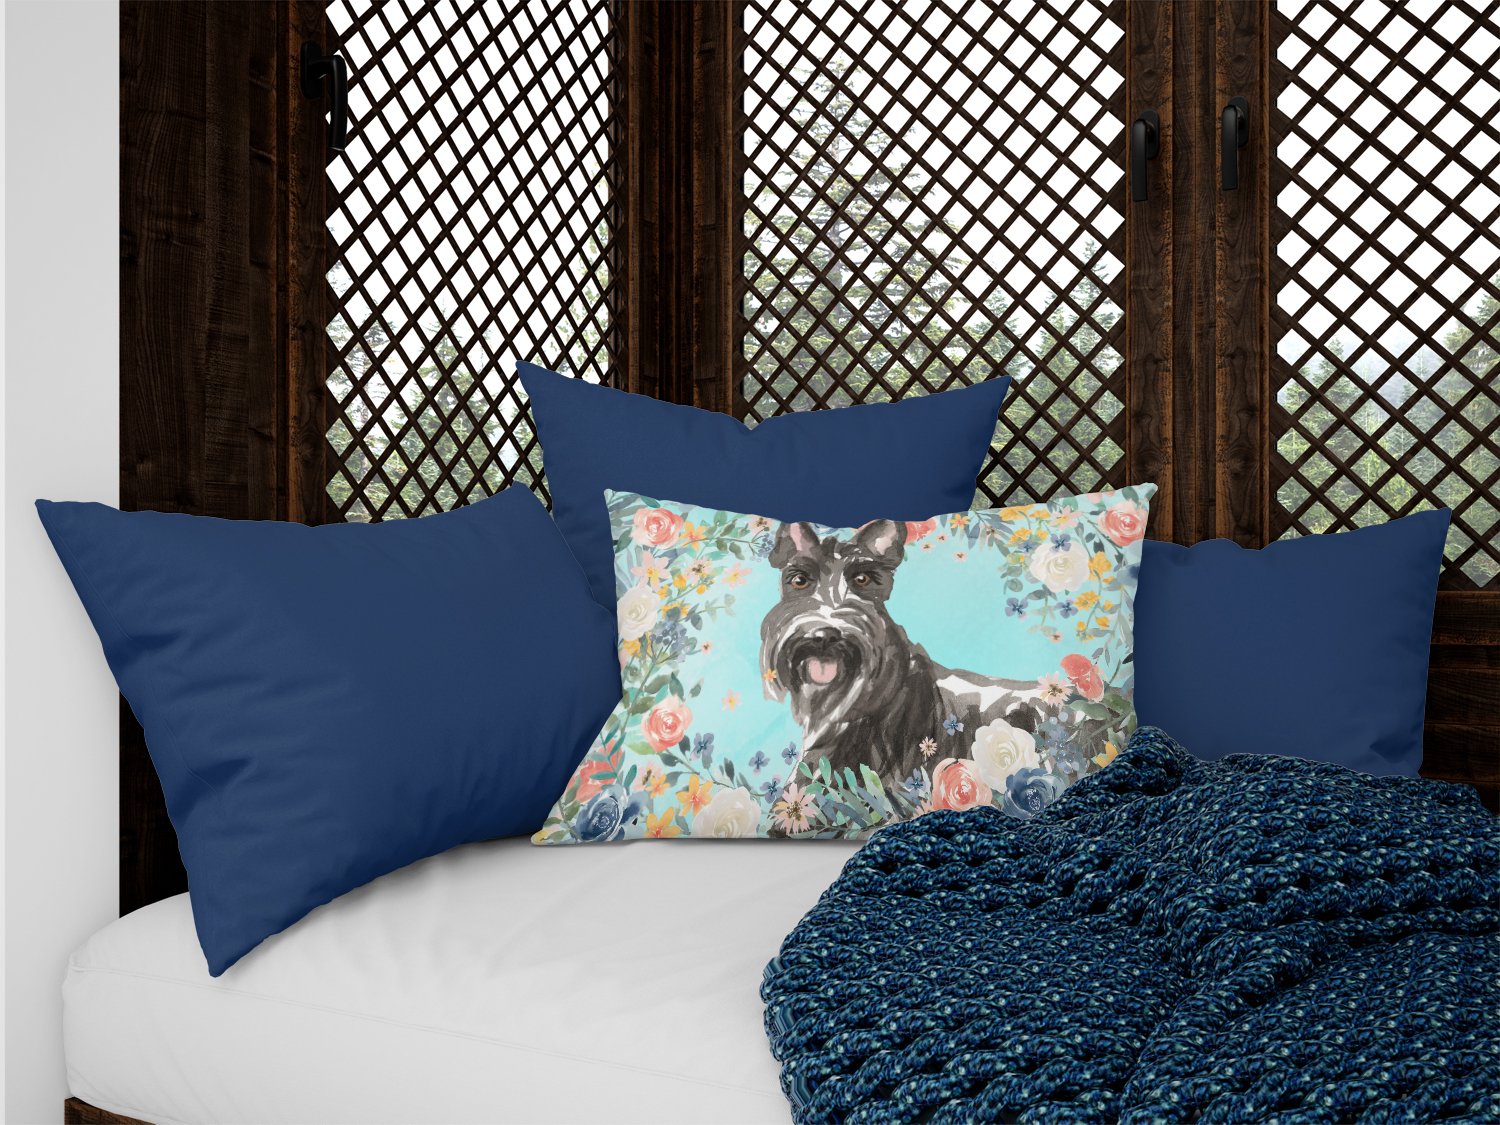 Scottish Terrier Canvas Fabric Decorative Pillow CK3412PW1216 by Caroline's Treasures